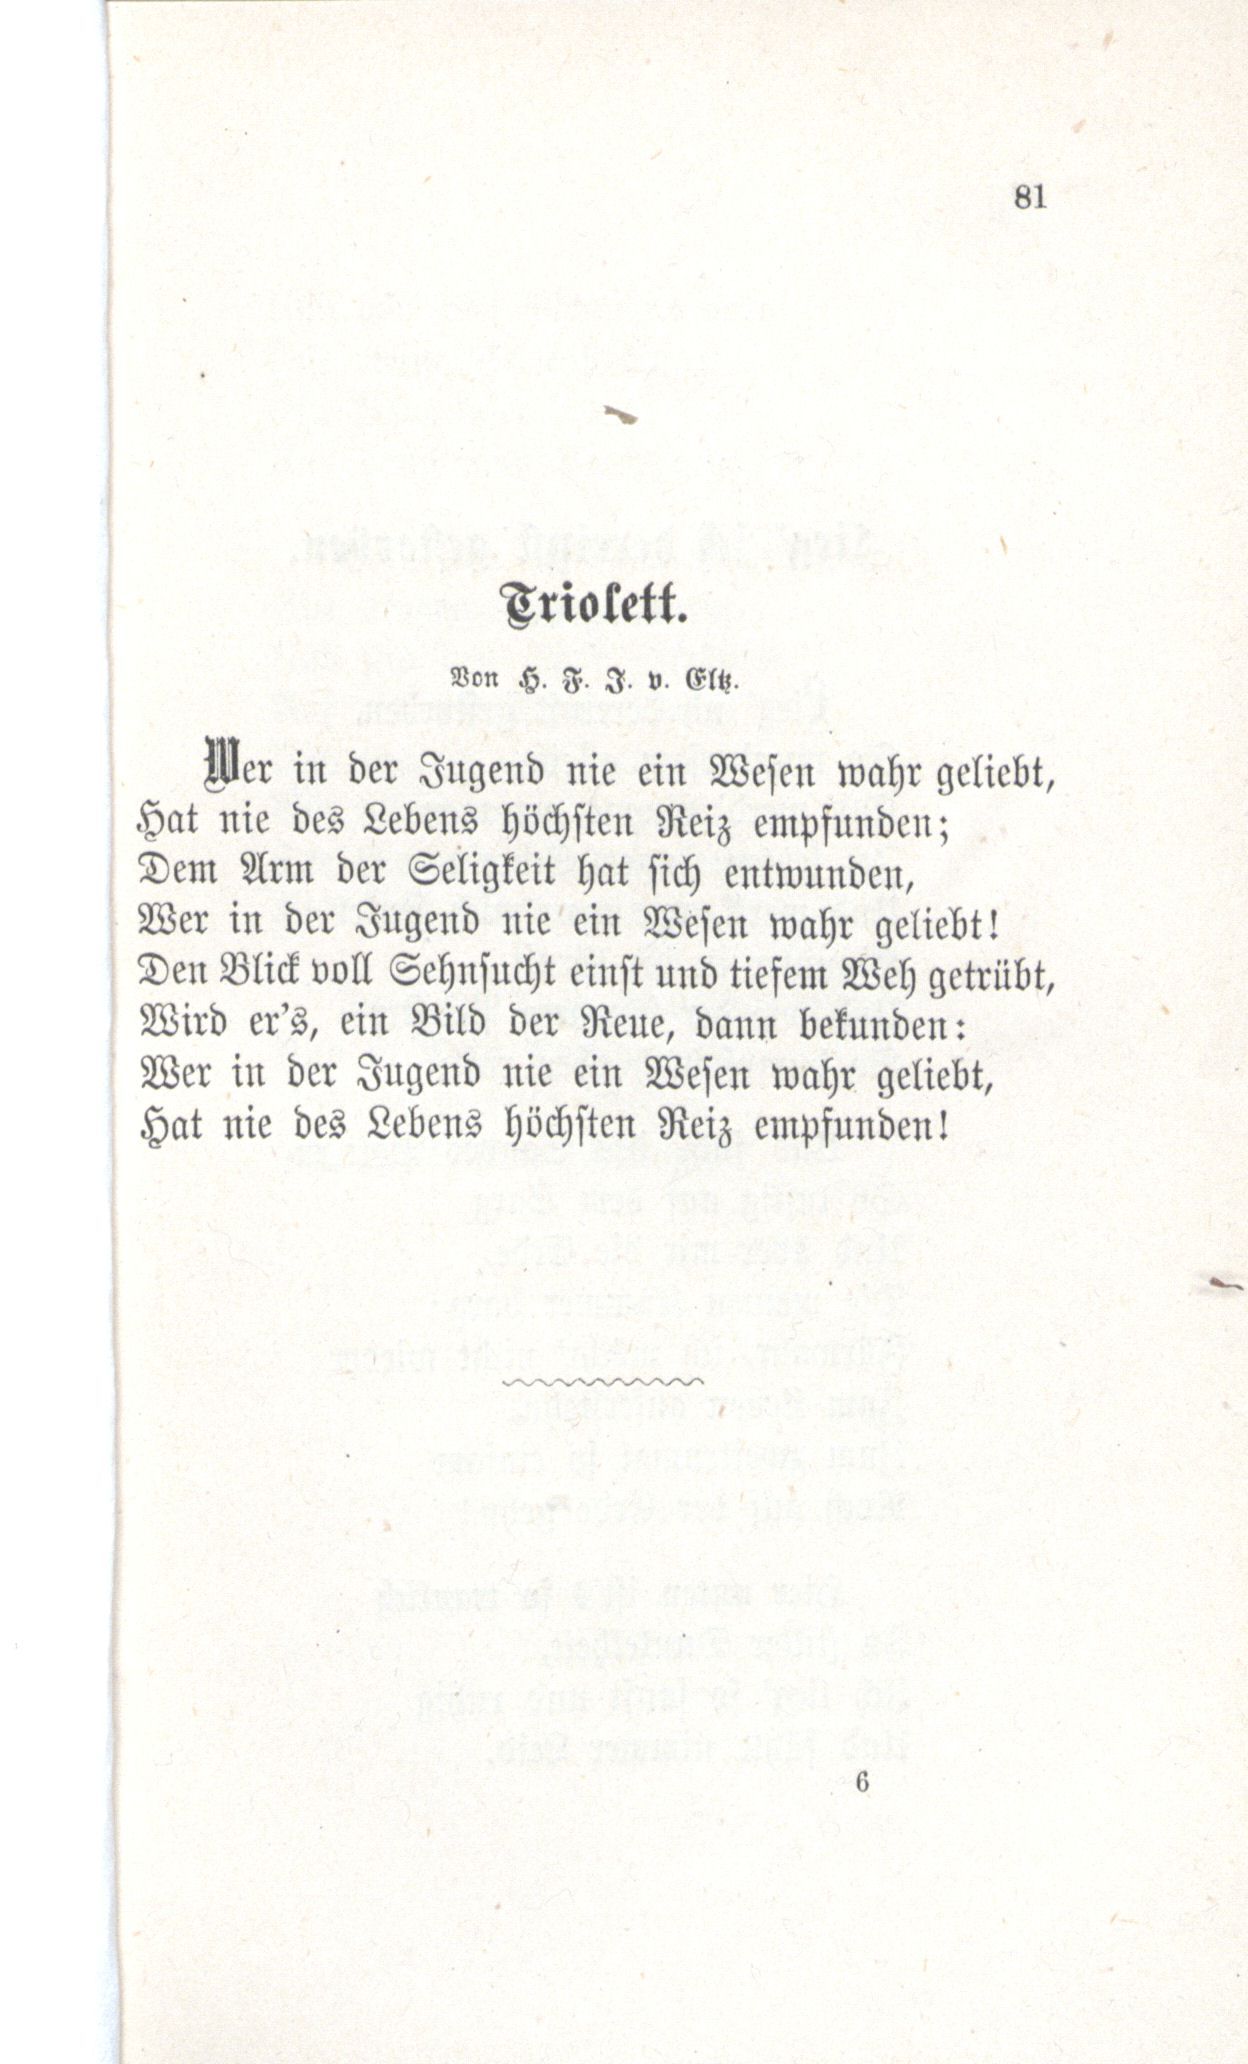 Erinnerung an die Fraternitas (1880) | 82. (81) Main body of text